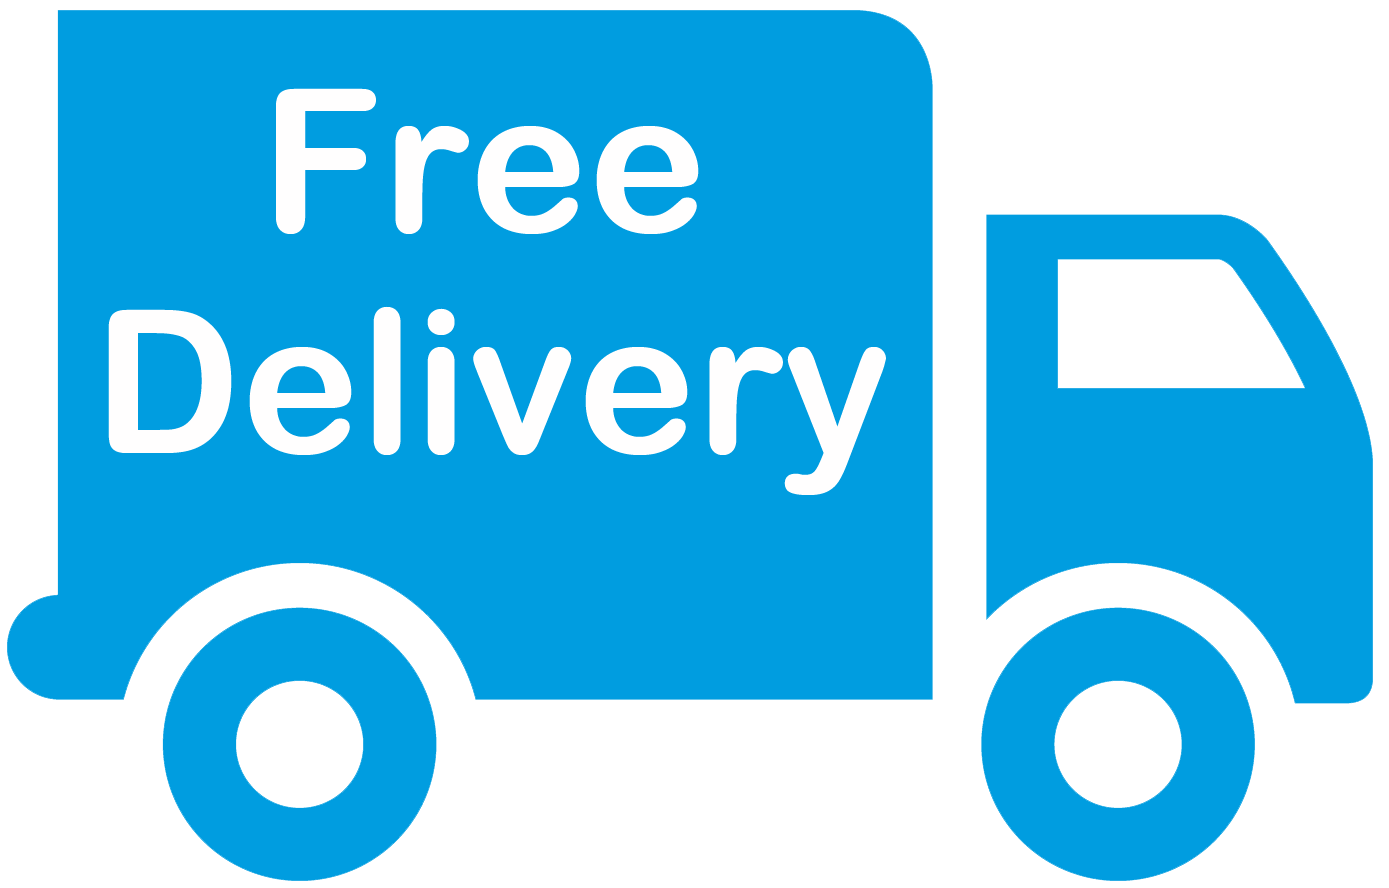 free-delivery-icon-blue-009de0